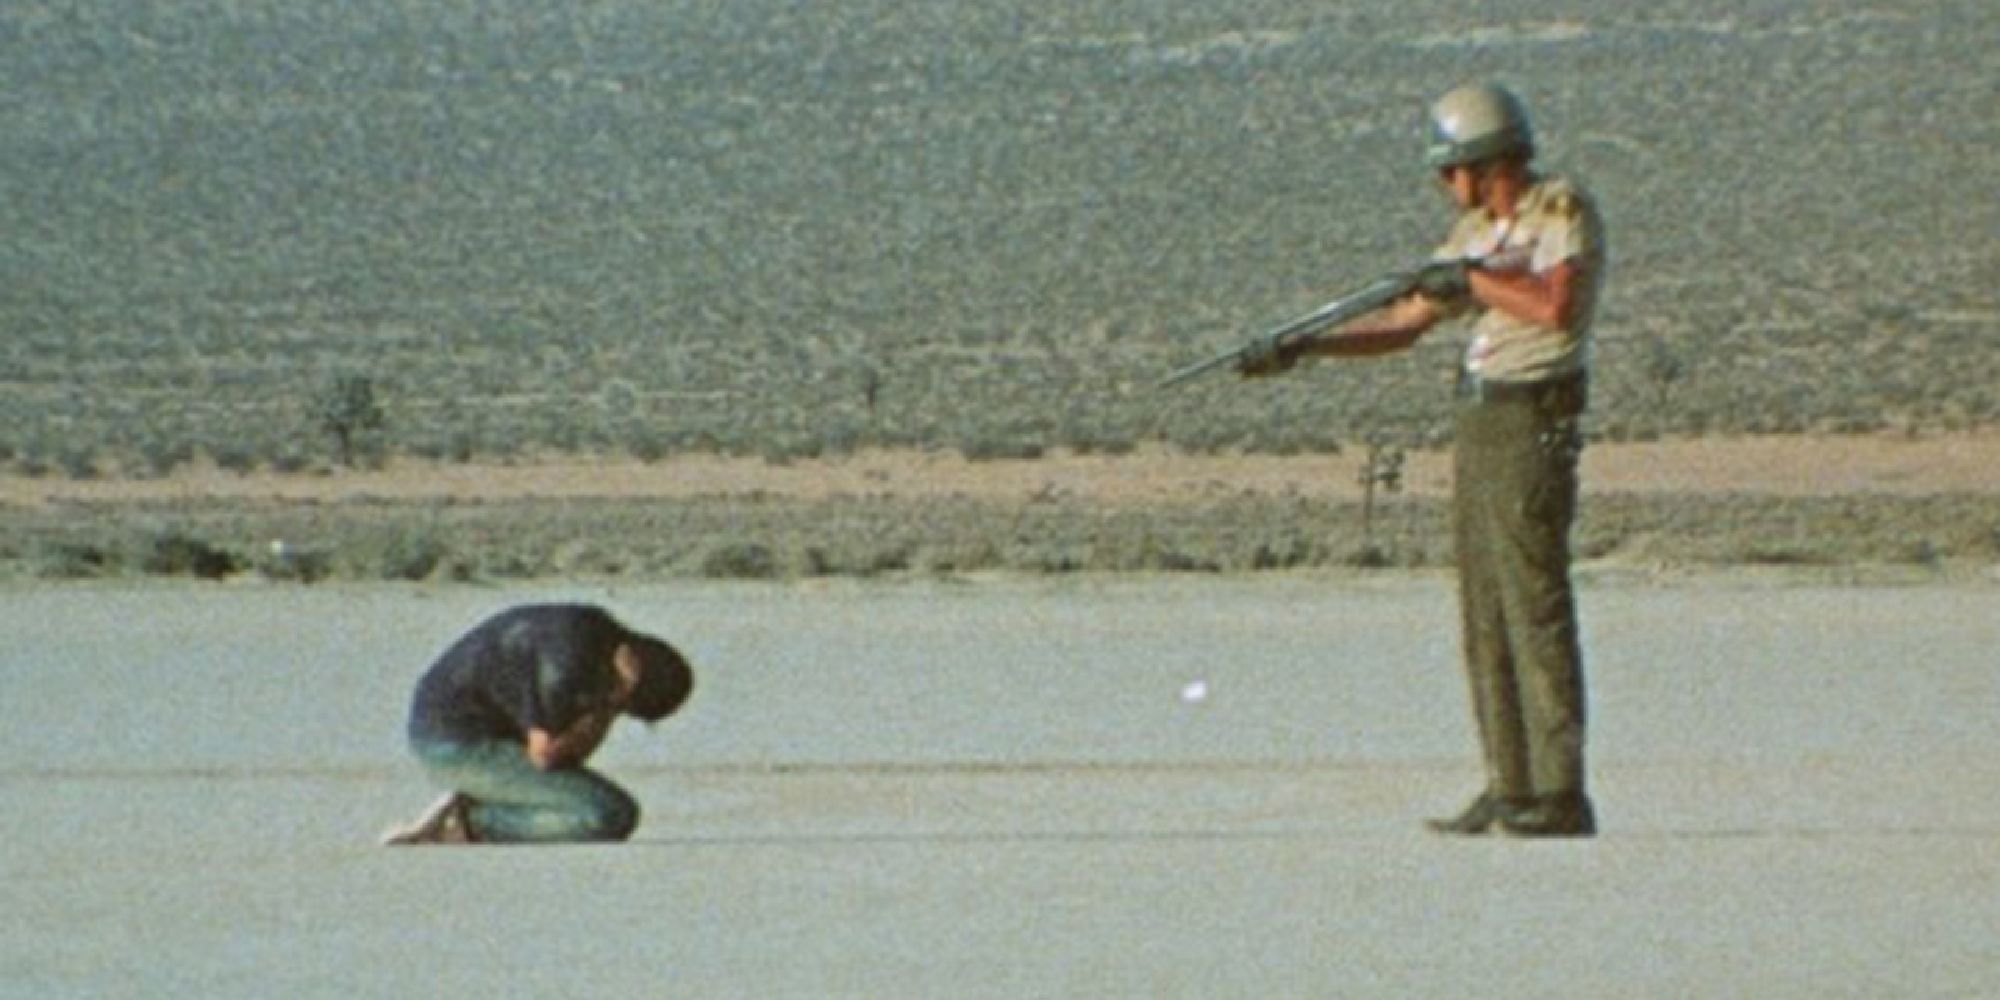 A police officer aims a shotgun at a kneeling man